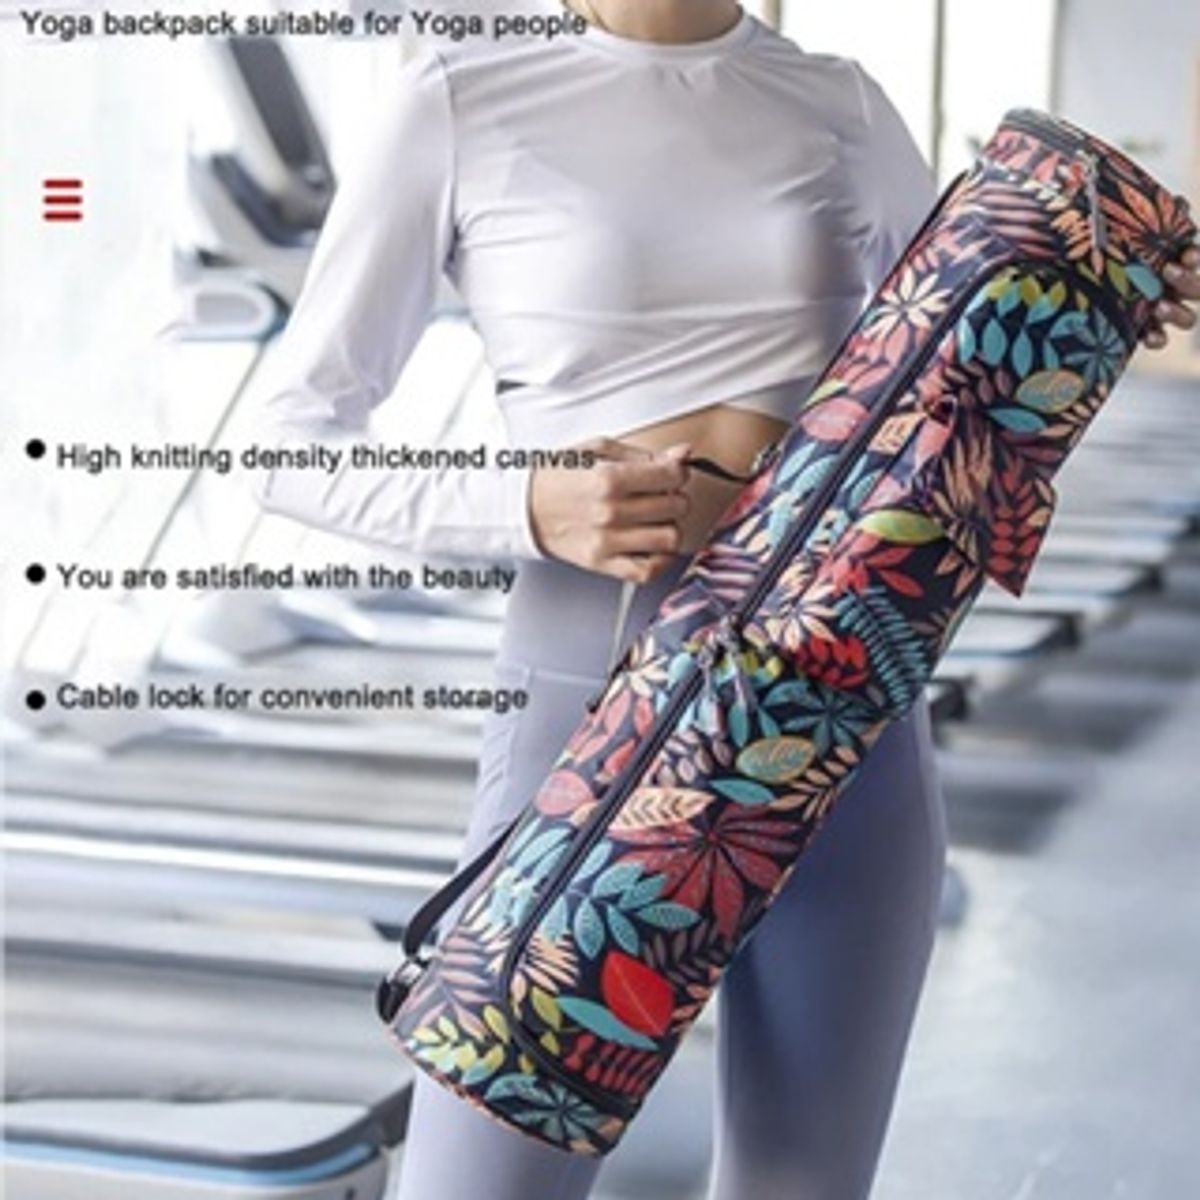 Yoga Mat Backpack  Yoga mat, Yoga mats best, Backpacks